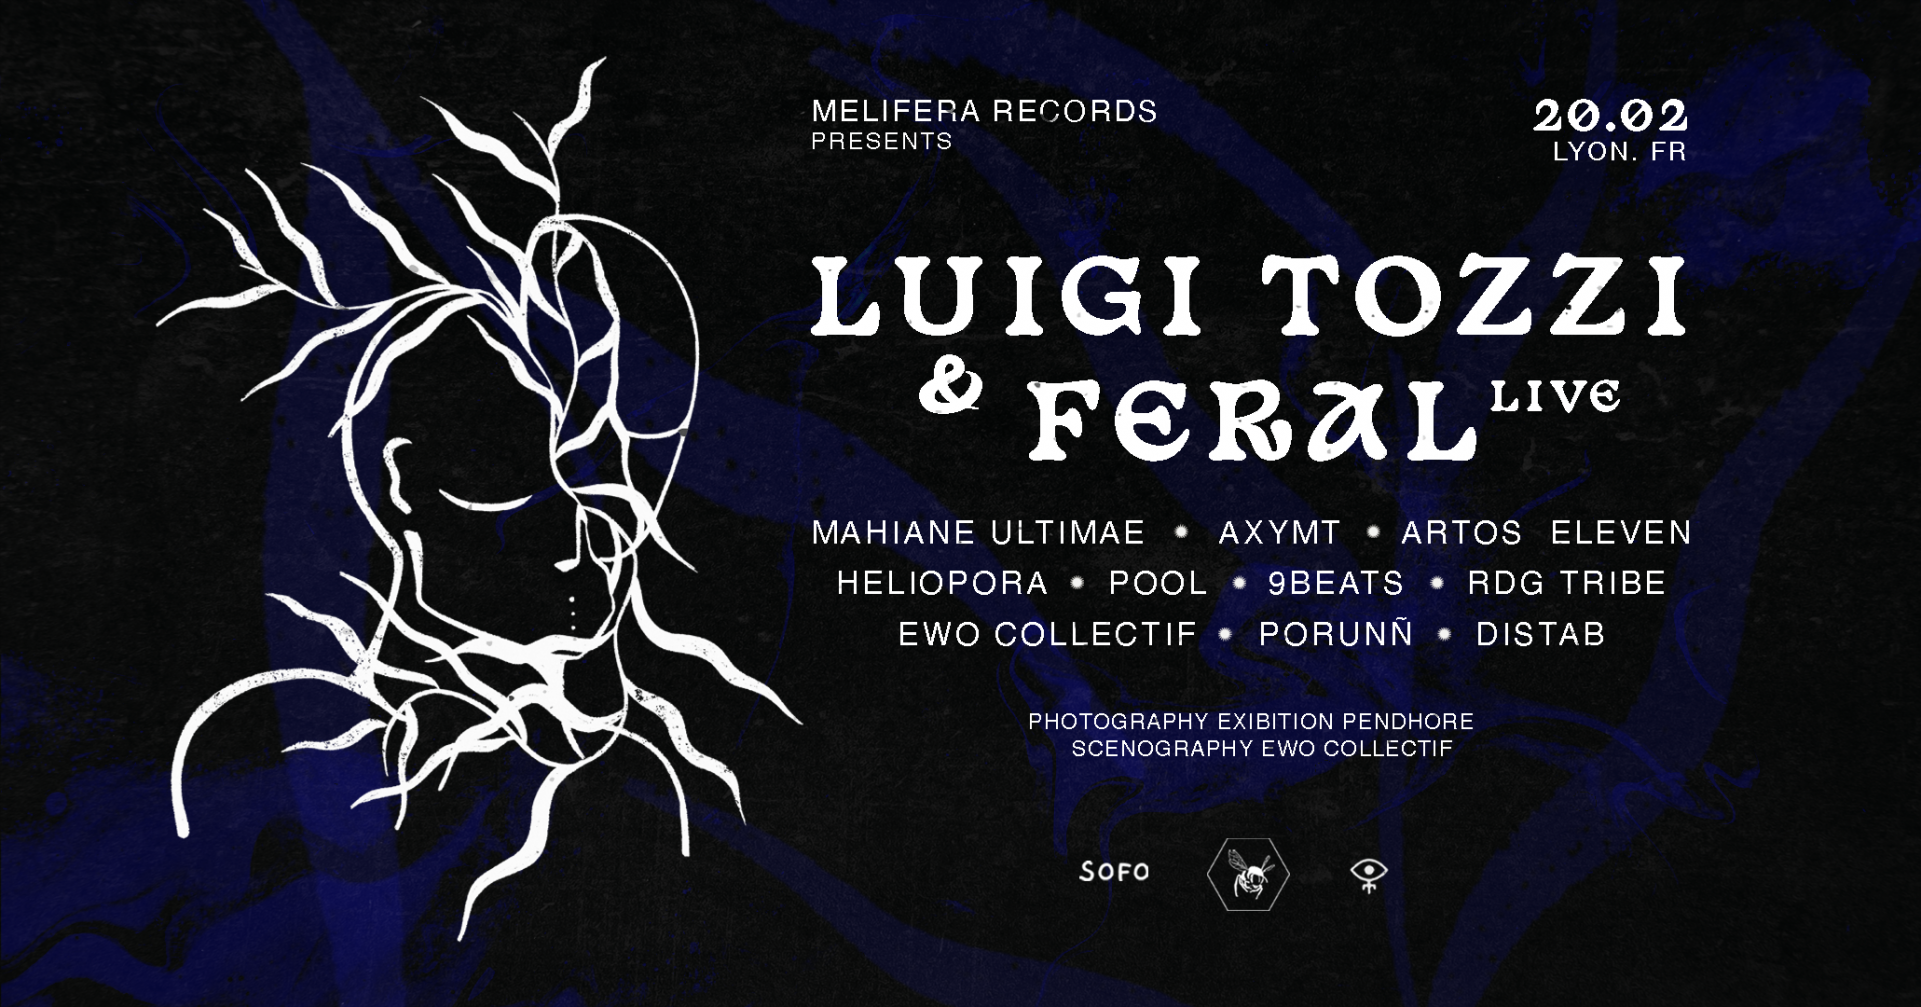 Luigi Tozzi & Feral live mellifera Records lyon event 